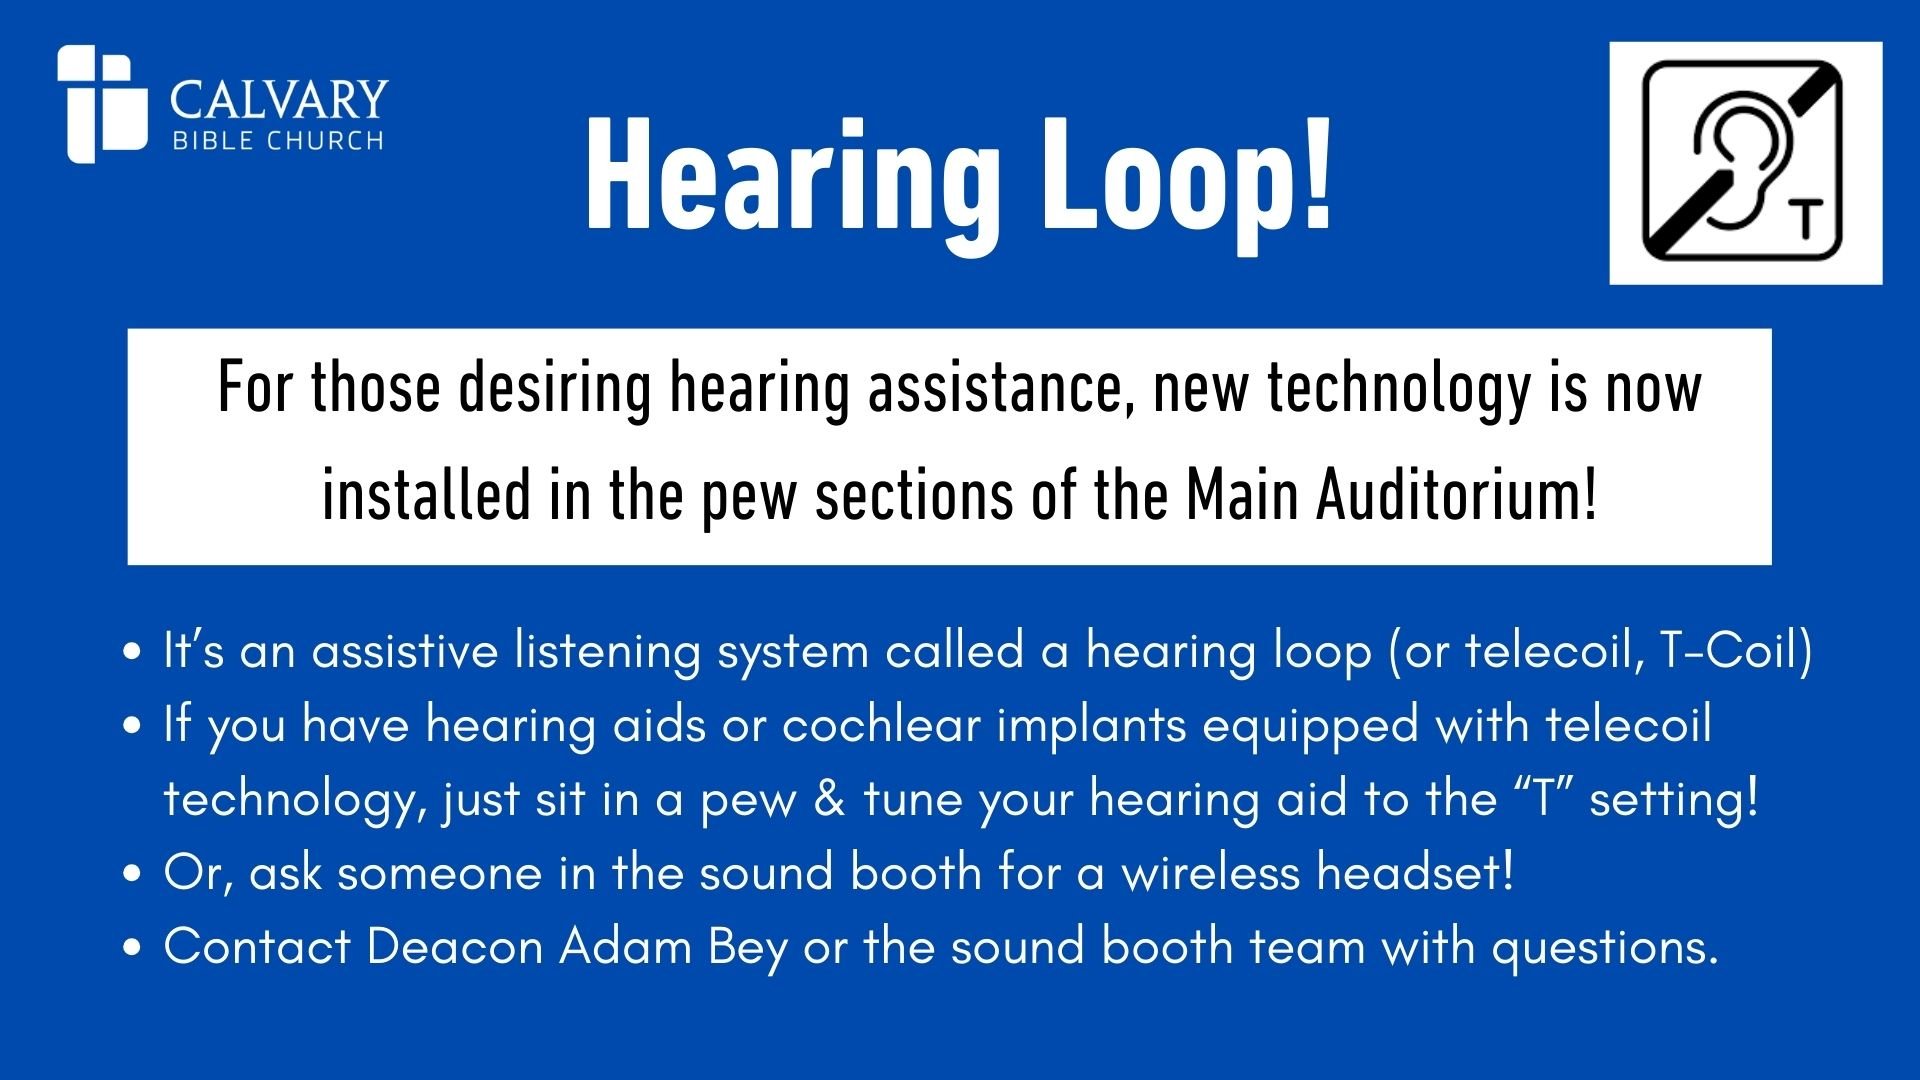 Hearing Loop now installed in the Main Auditorium!.jpg